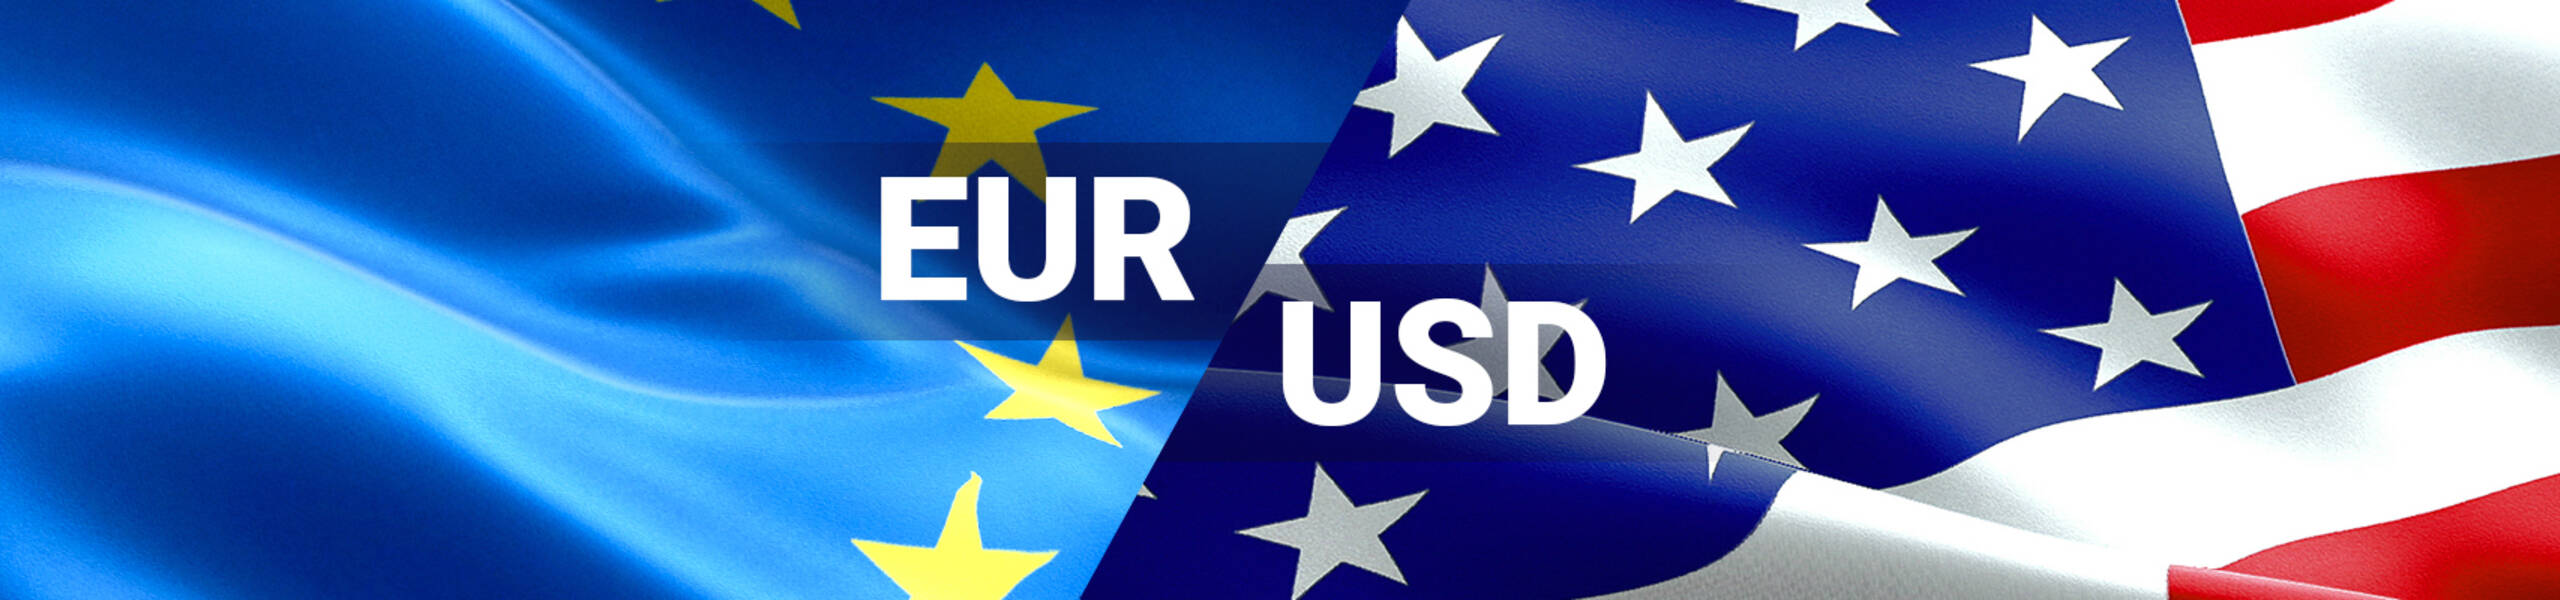 EUR/USD is still bullish, looks for a lower leg